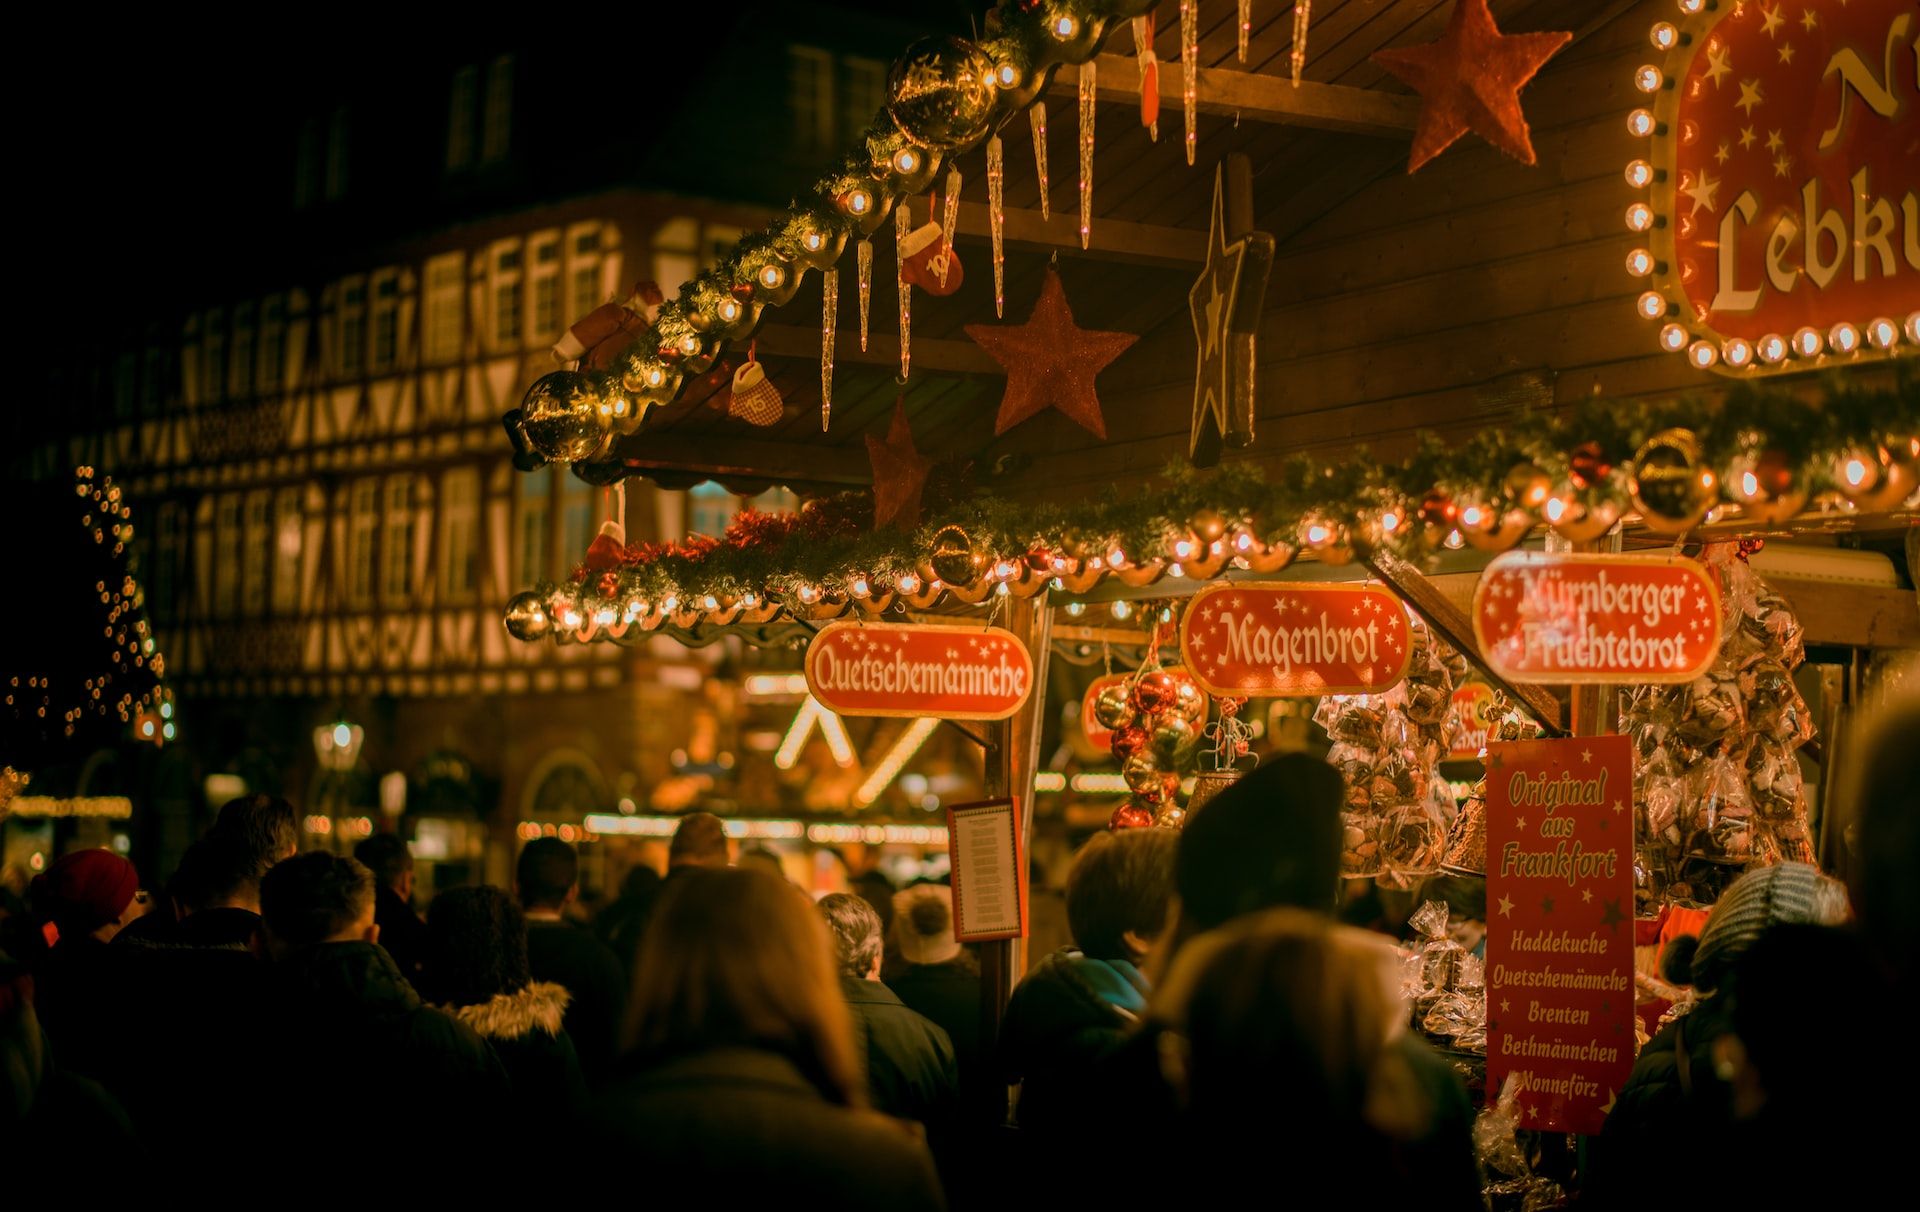 A German Christmas market